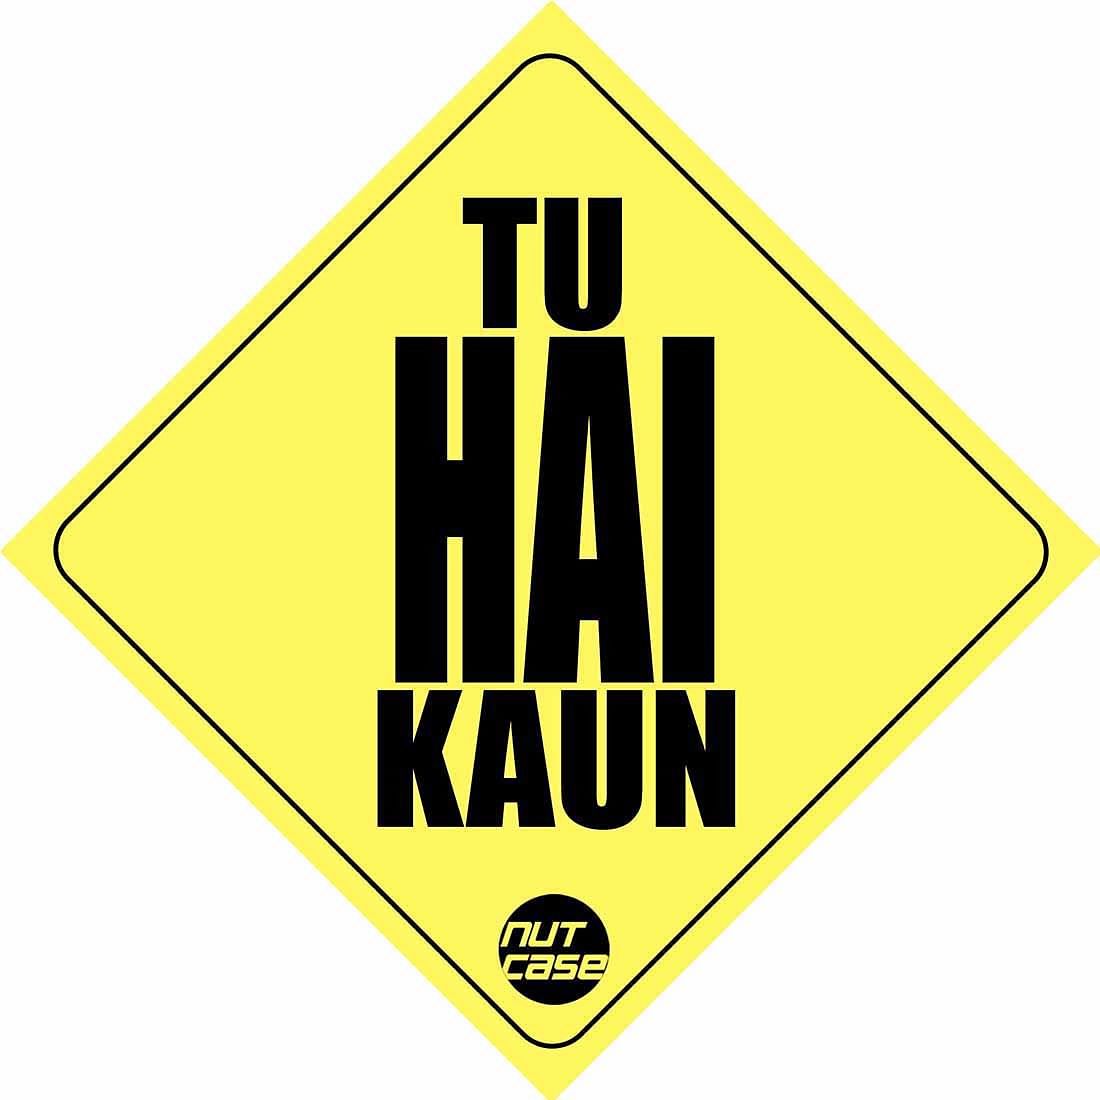 Automobile Unique Car Stickers - Tu Hai Kaun Nutcase